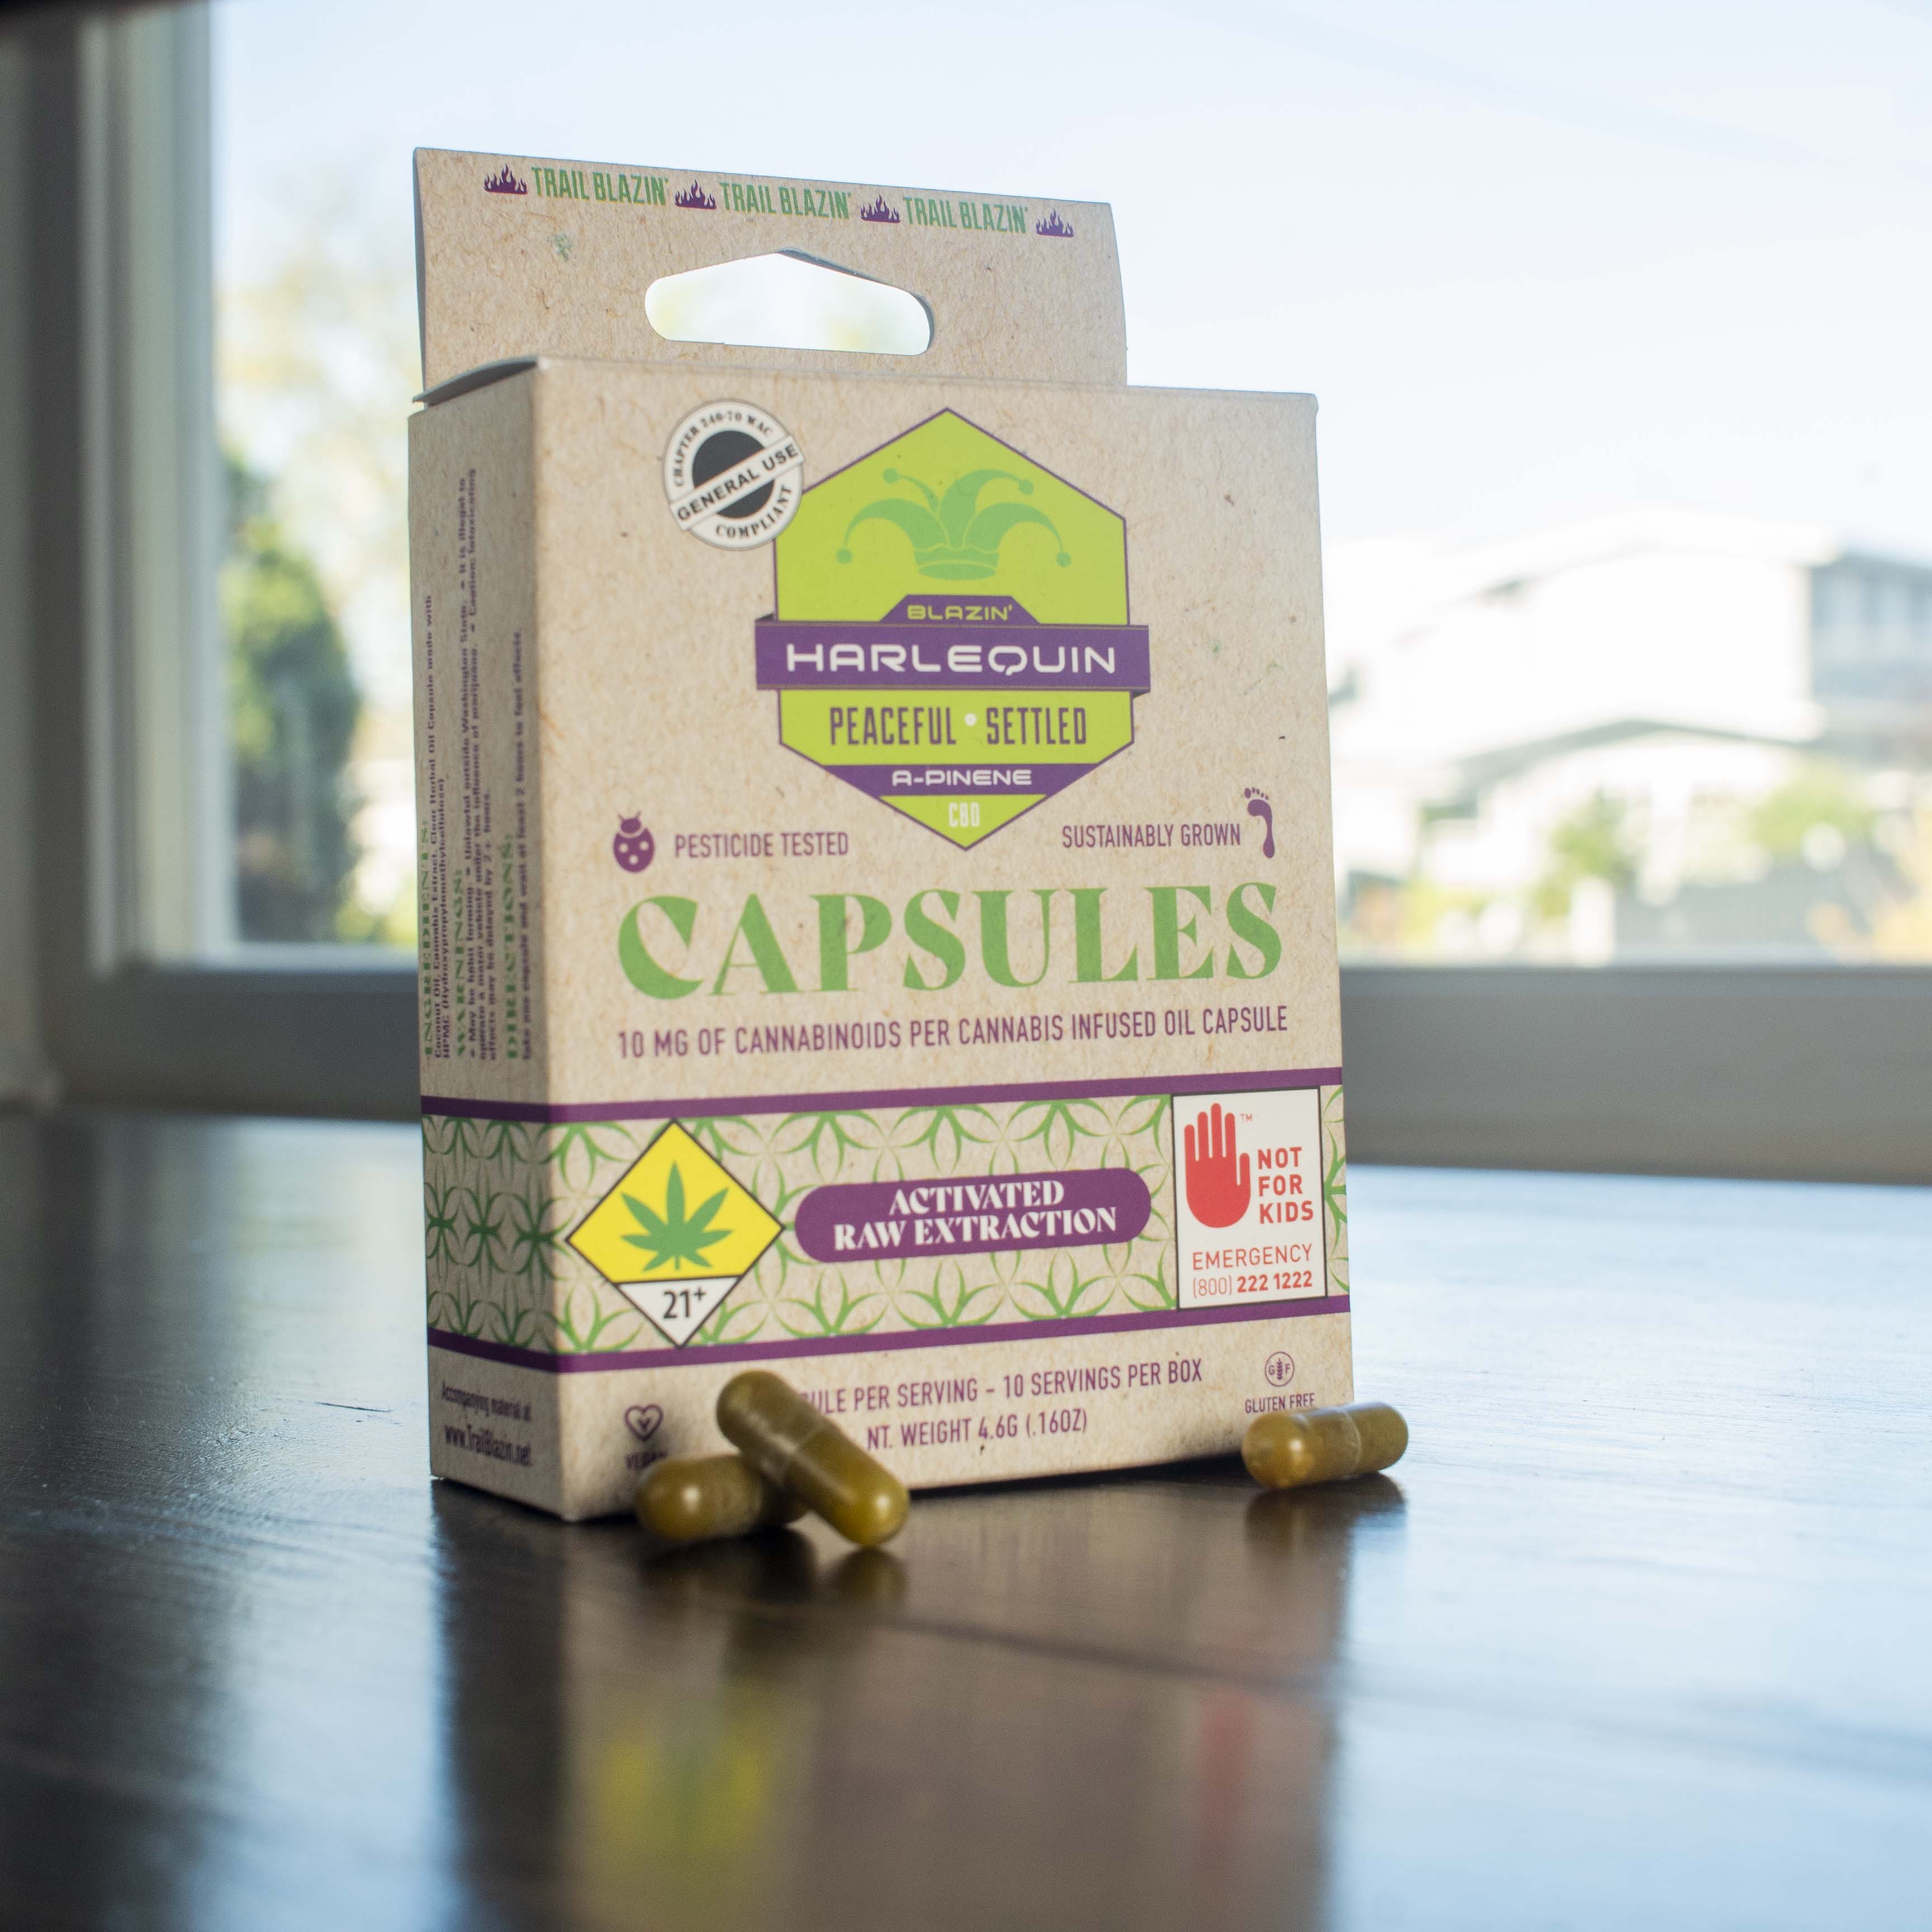 Harlequin capsule box with capsules.